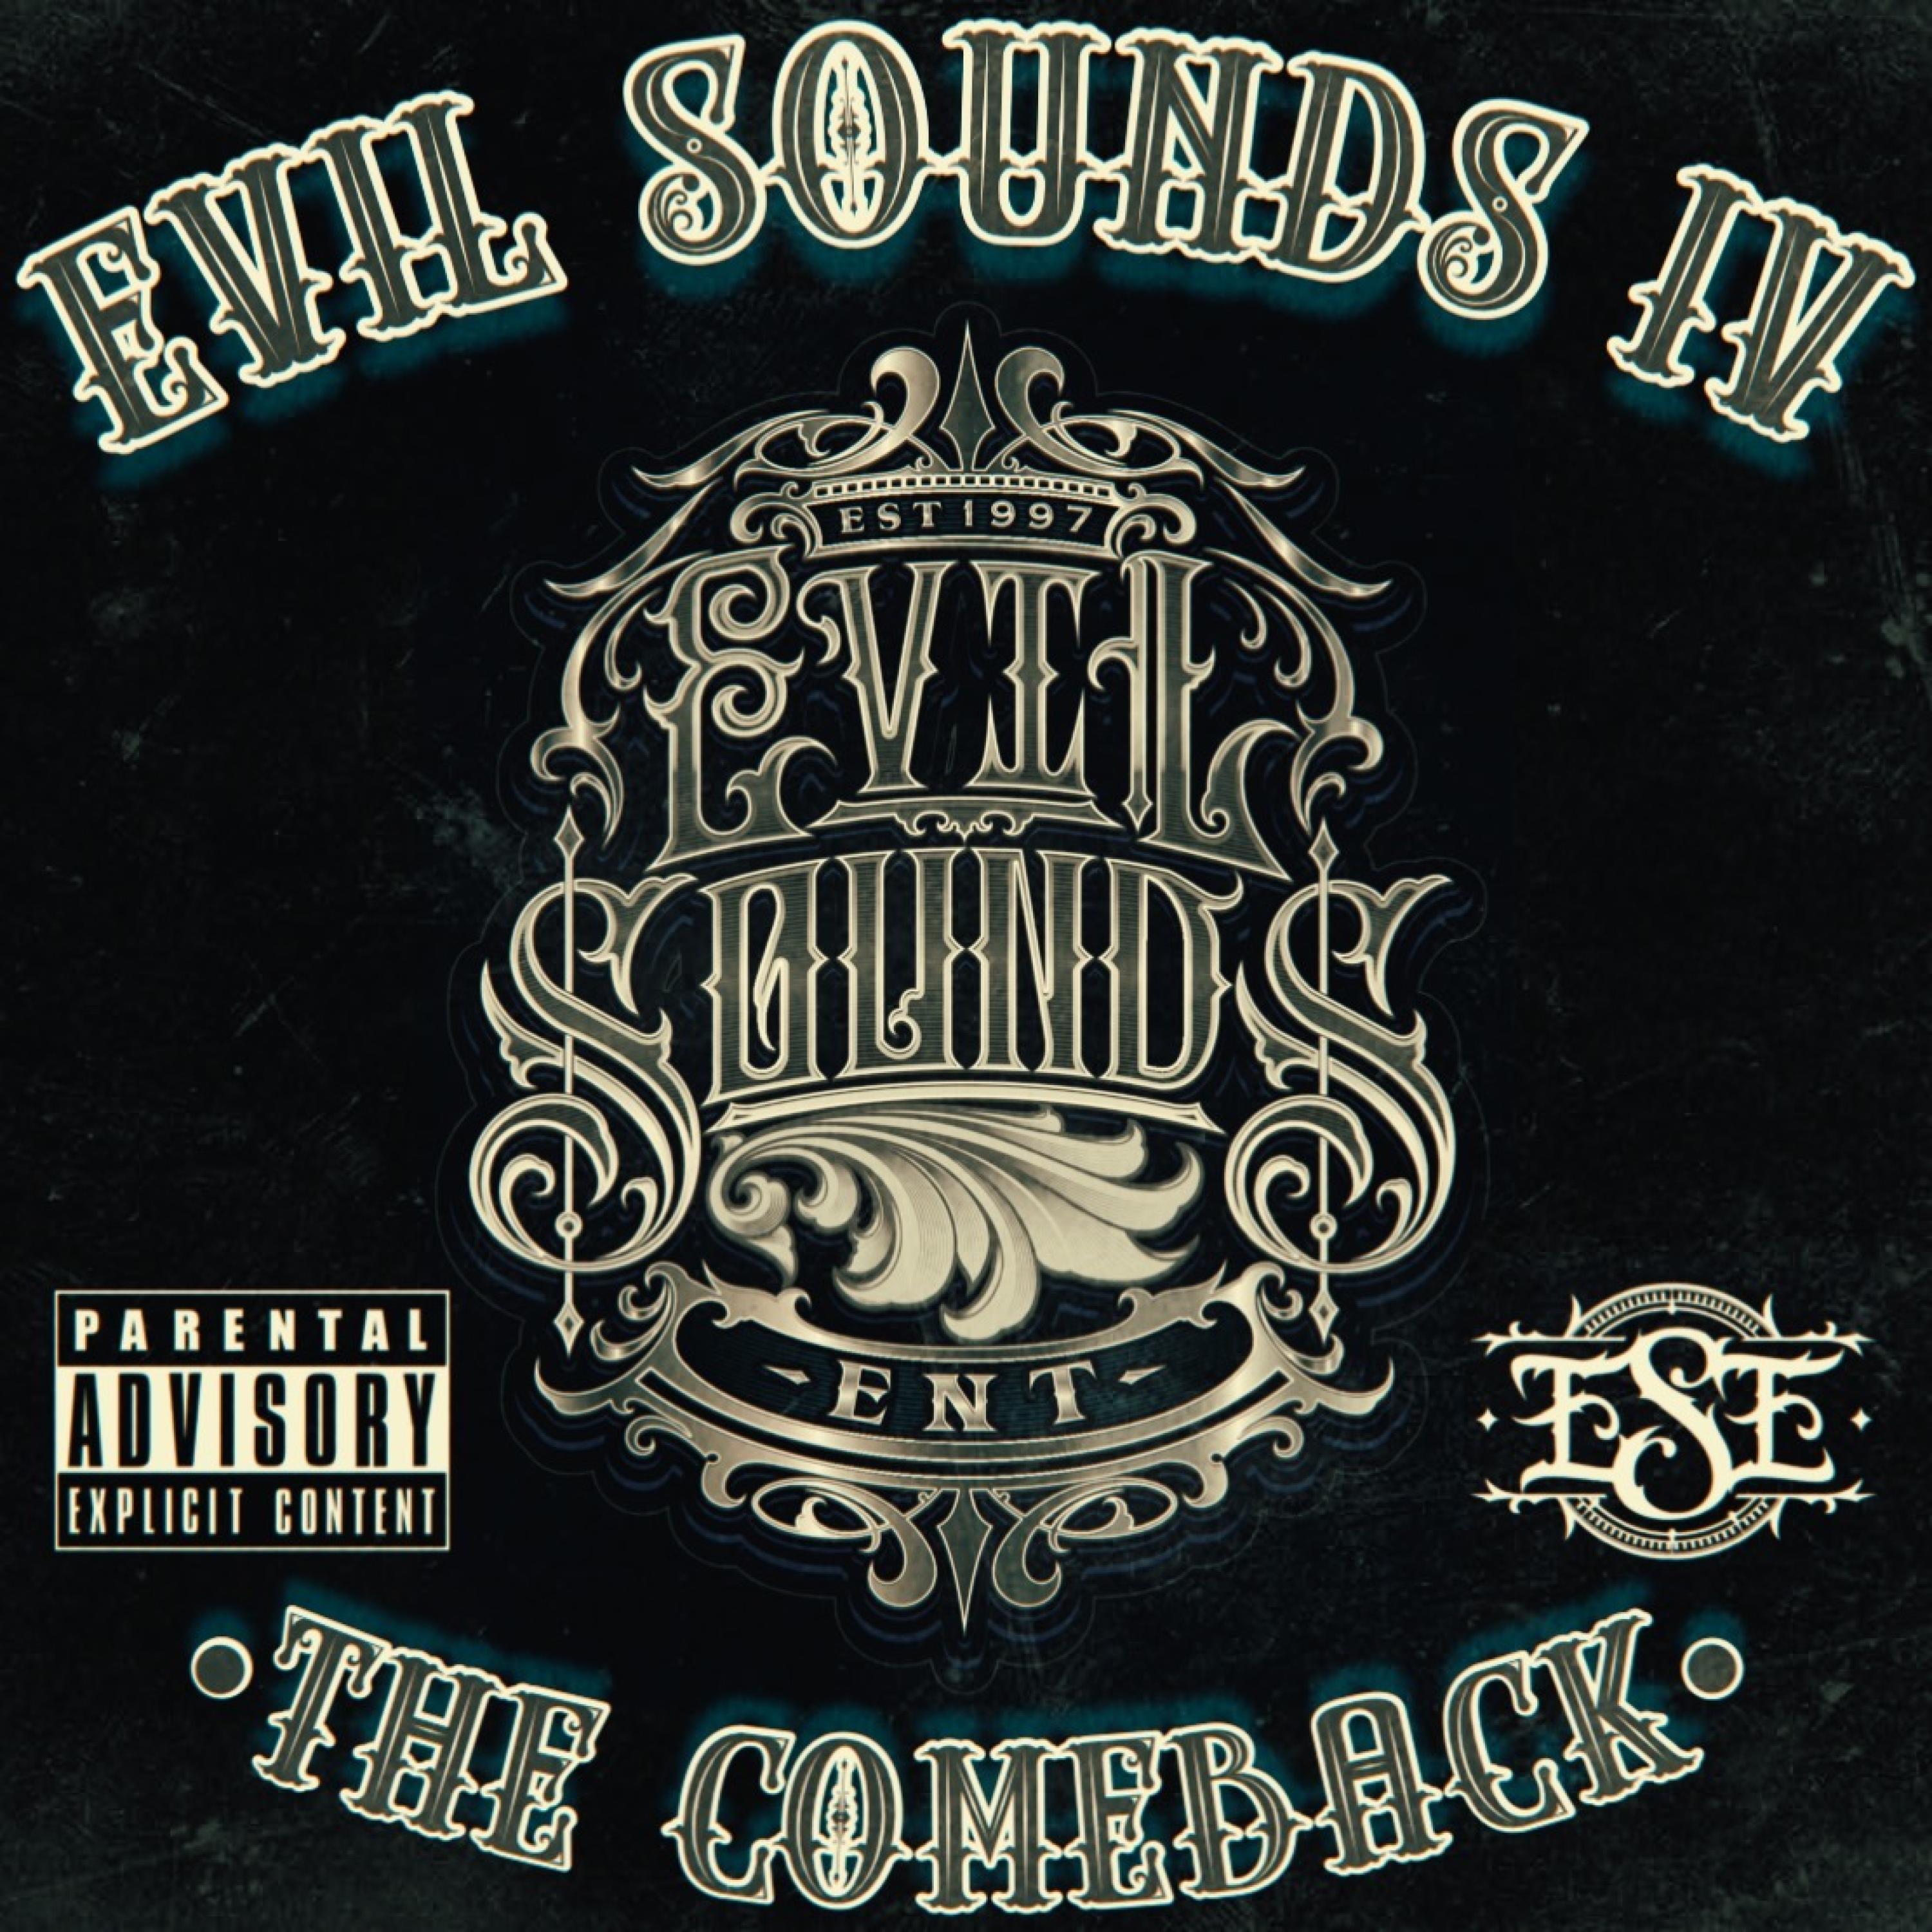 Evil Sounds - Chevy Dippen (feat. R.Villarreal805 & Big Pokes)